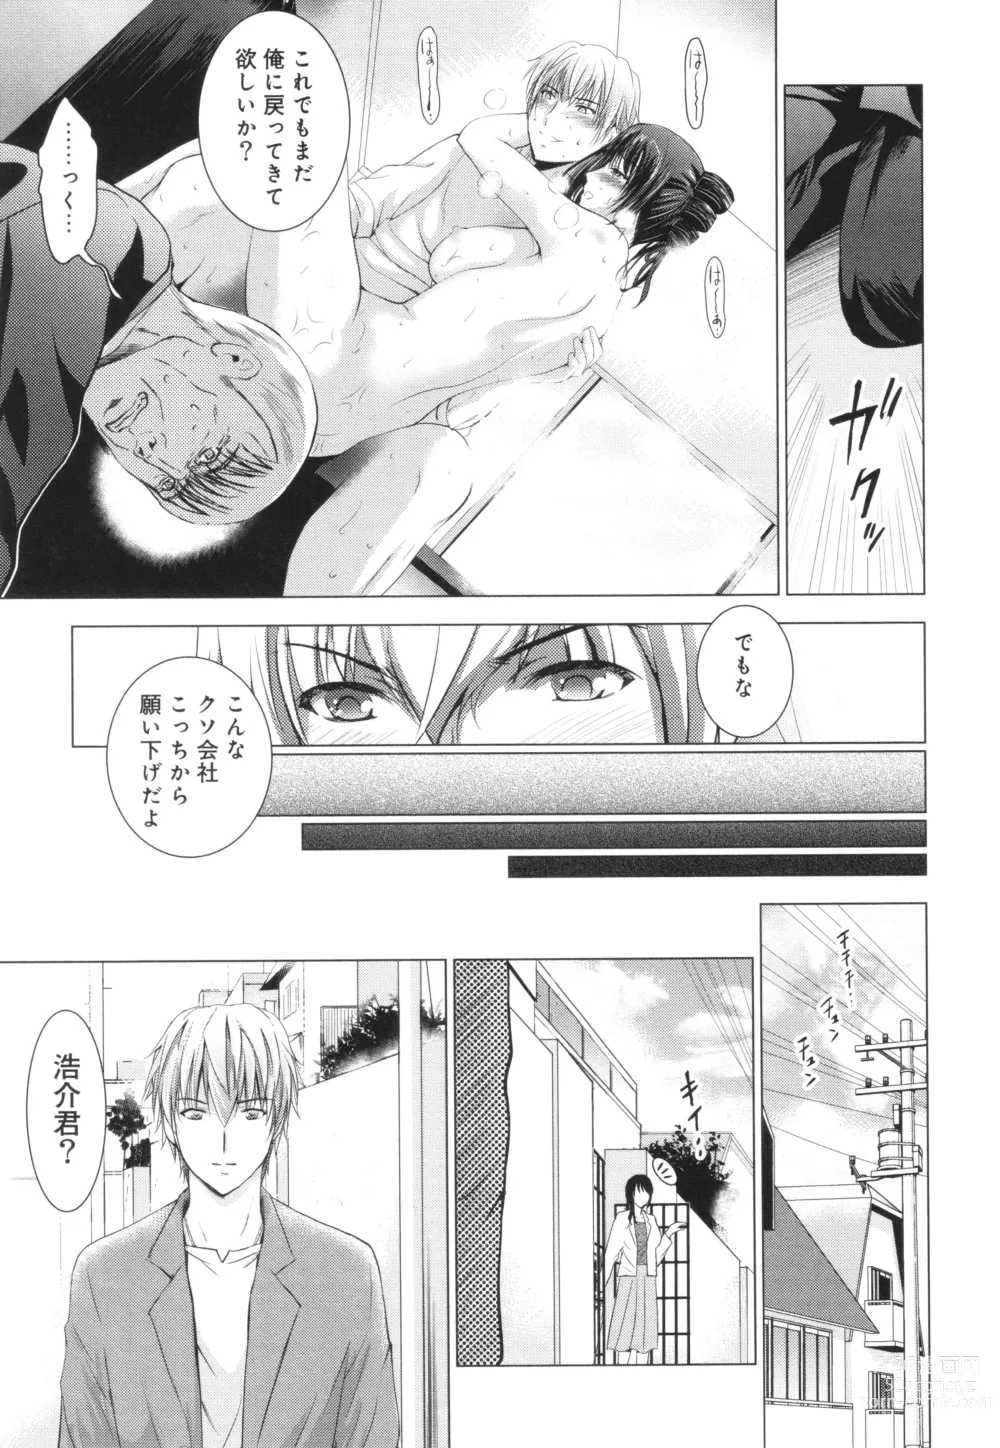 Page 210 of manga Hadaka no Panorama